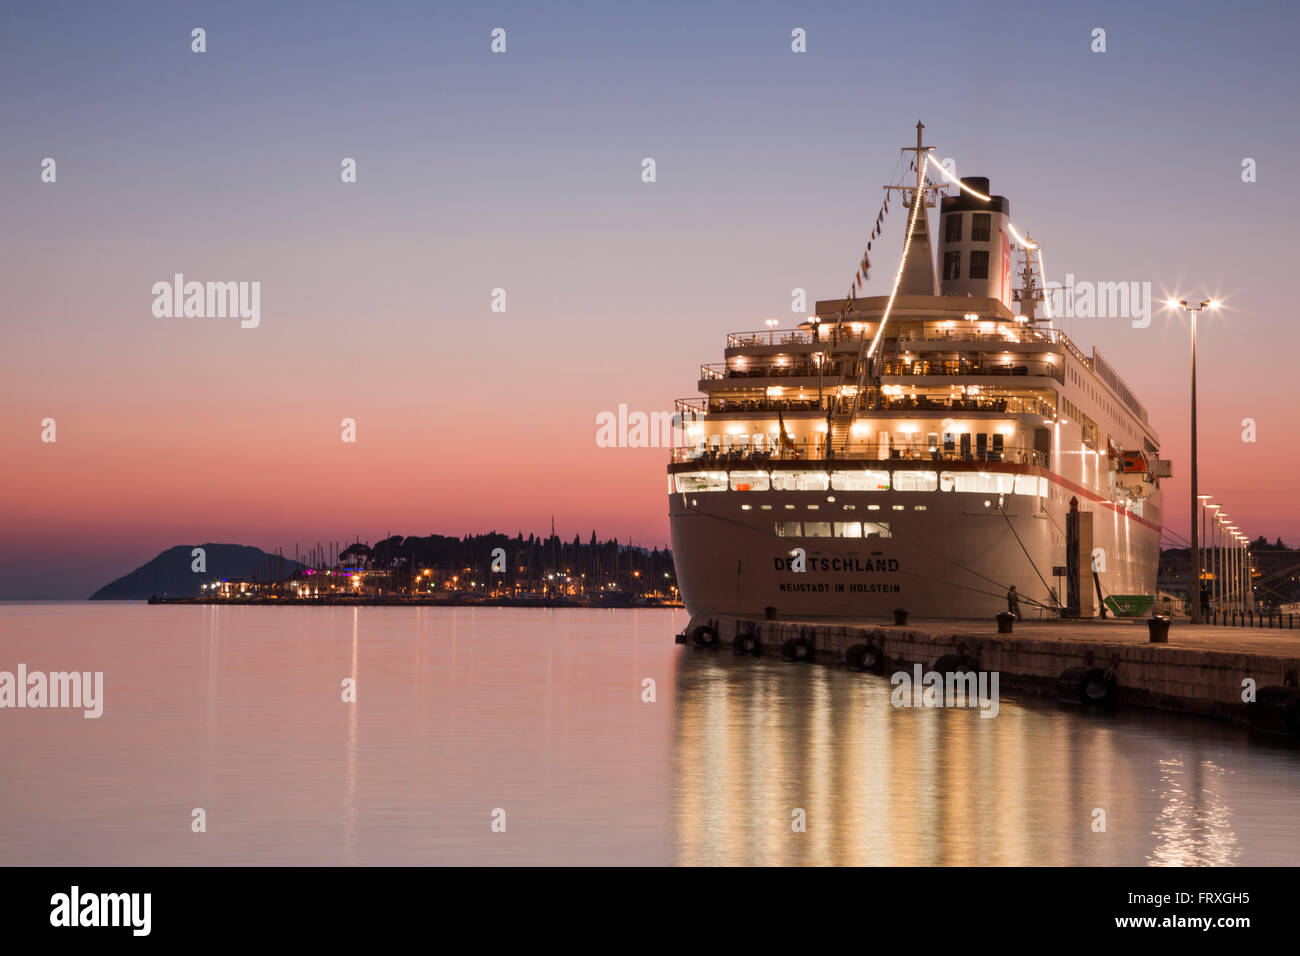 Cruise ship MS Deutschland, Reederei Peter Deilmann, at the pier at dusk, Split, Split-Dalmatia, Croatia Stock Photo